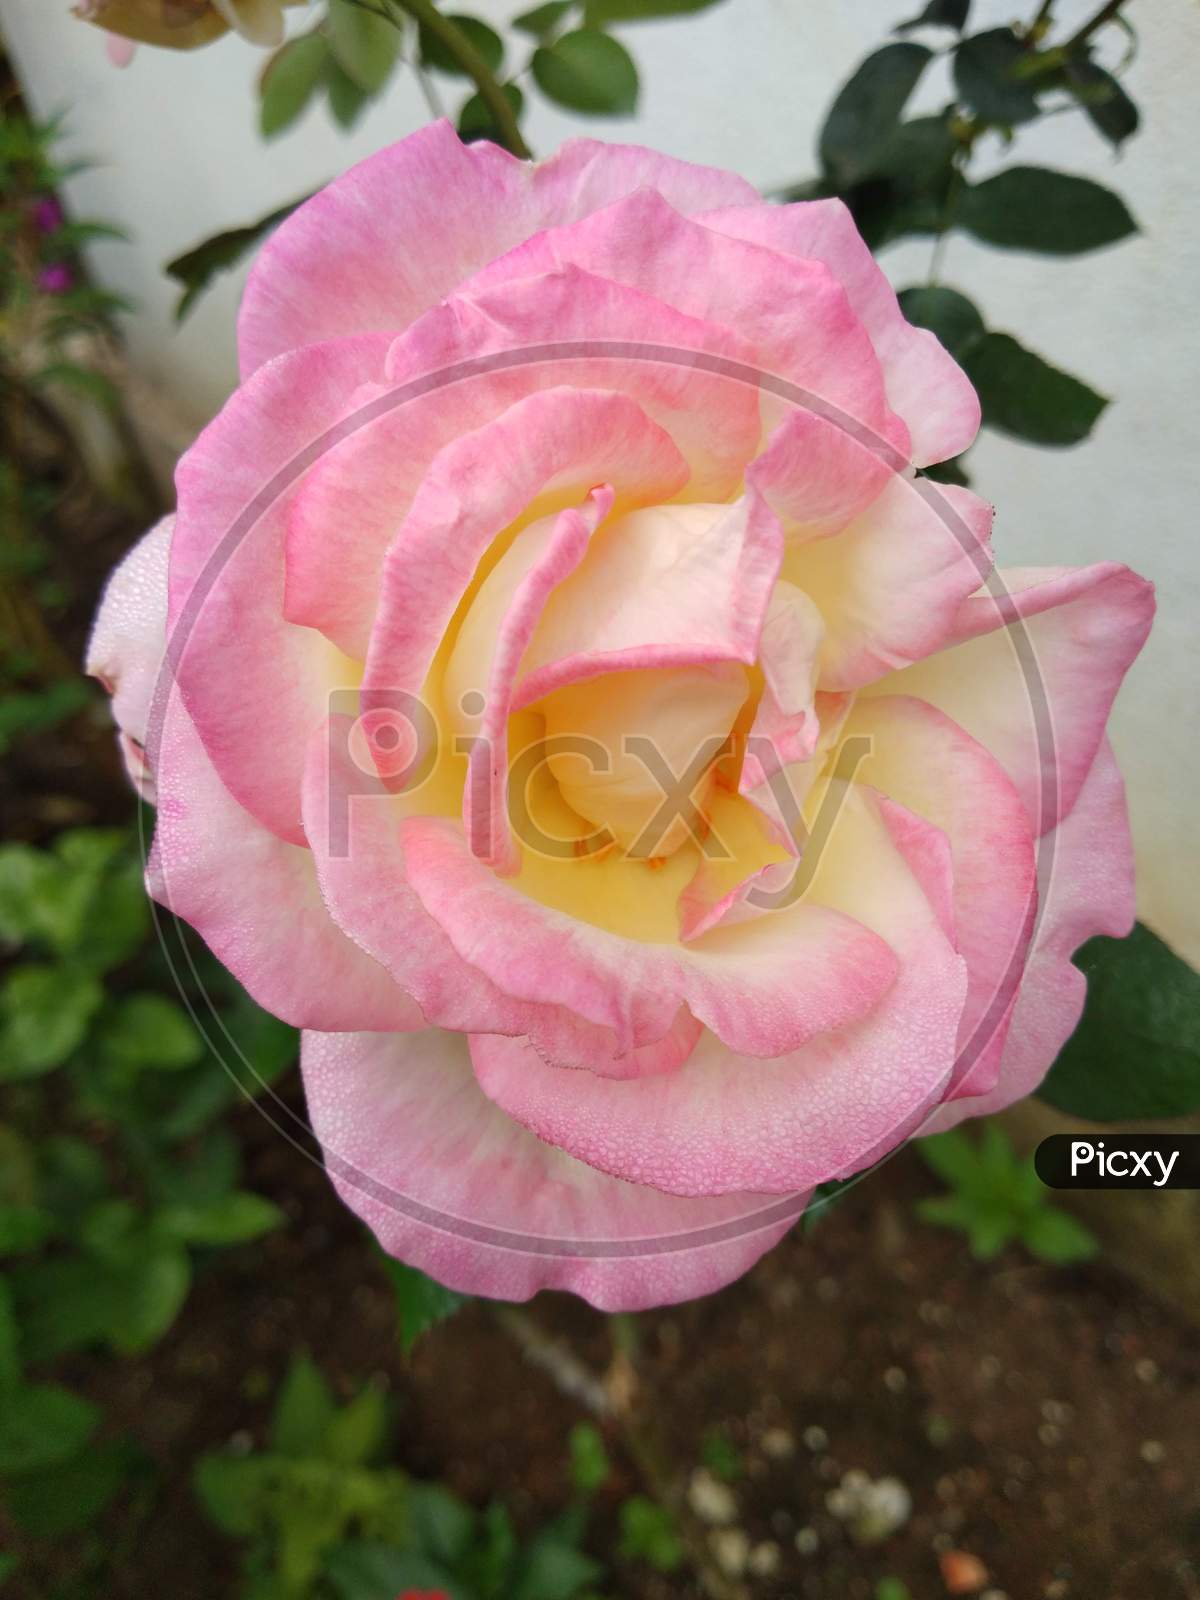 Light pinkish white rose flower